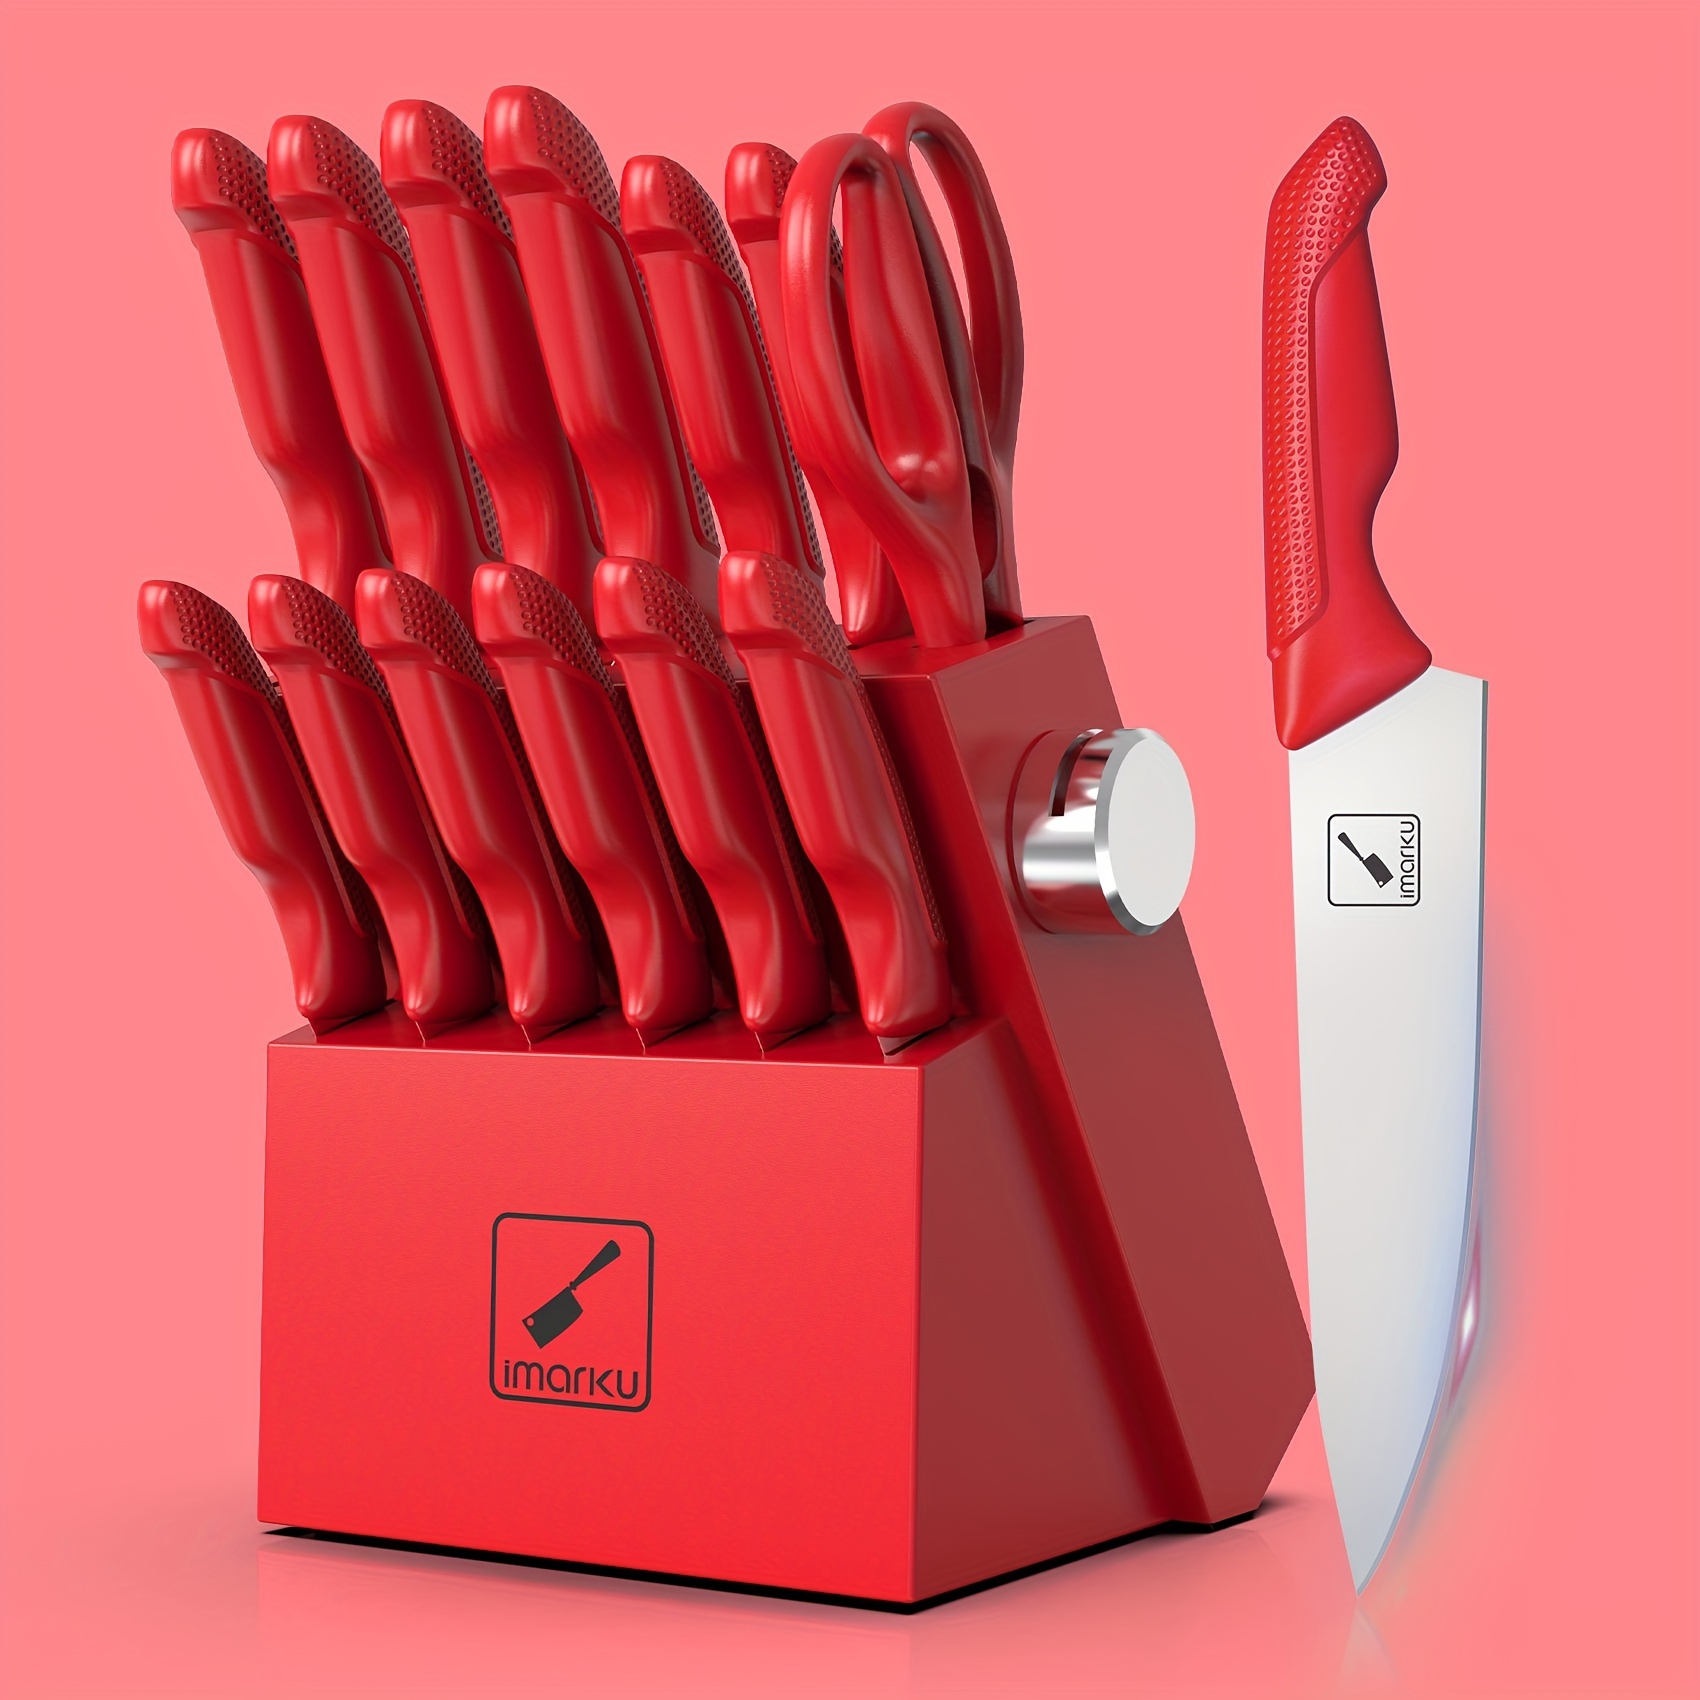 

I Marku Knife Set With Block, Sharp Knife Set With Built-in Sharpener, Japanese Stainless Steel Kitchen Knife Set With Non-slip Ergonomic Handle, Dishwasher Safe, Best Holiday Gifts, 14 Pcs, Red